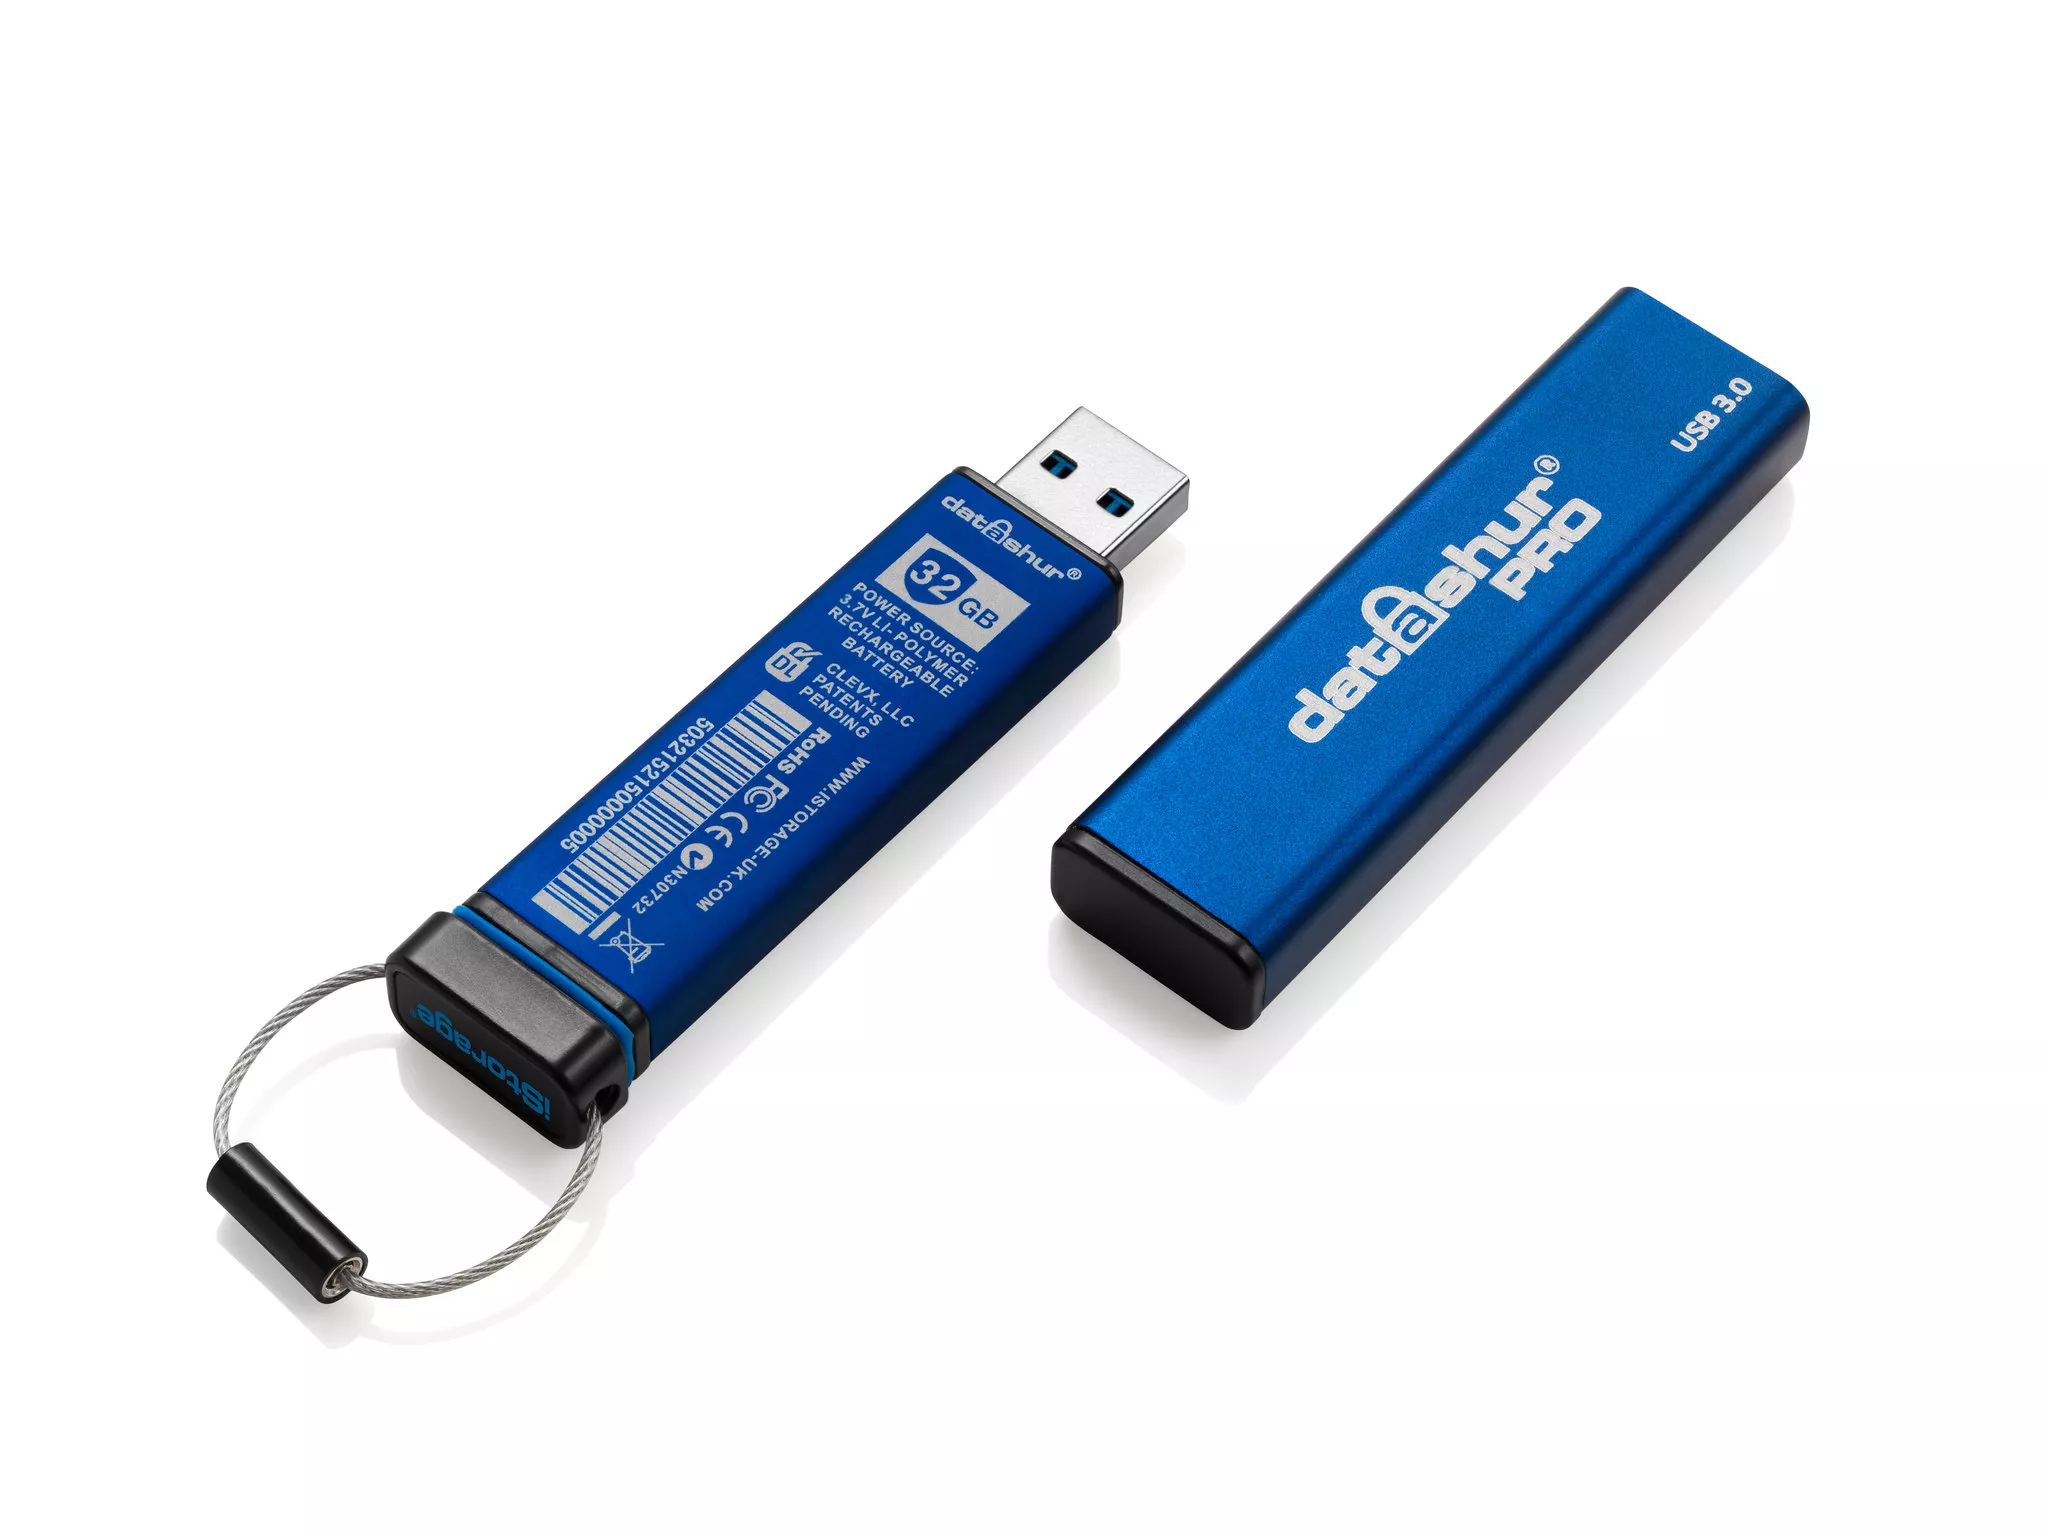 Vente iStorage datAshur Pro USB3 256-bit 4GB iStorage au meilleur prix - visuel 4